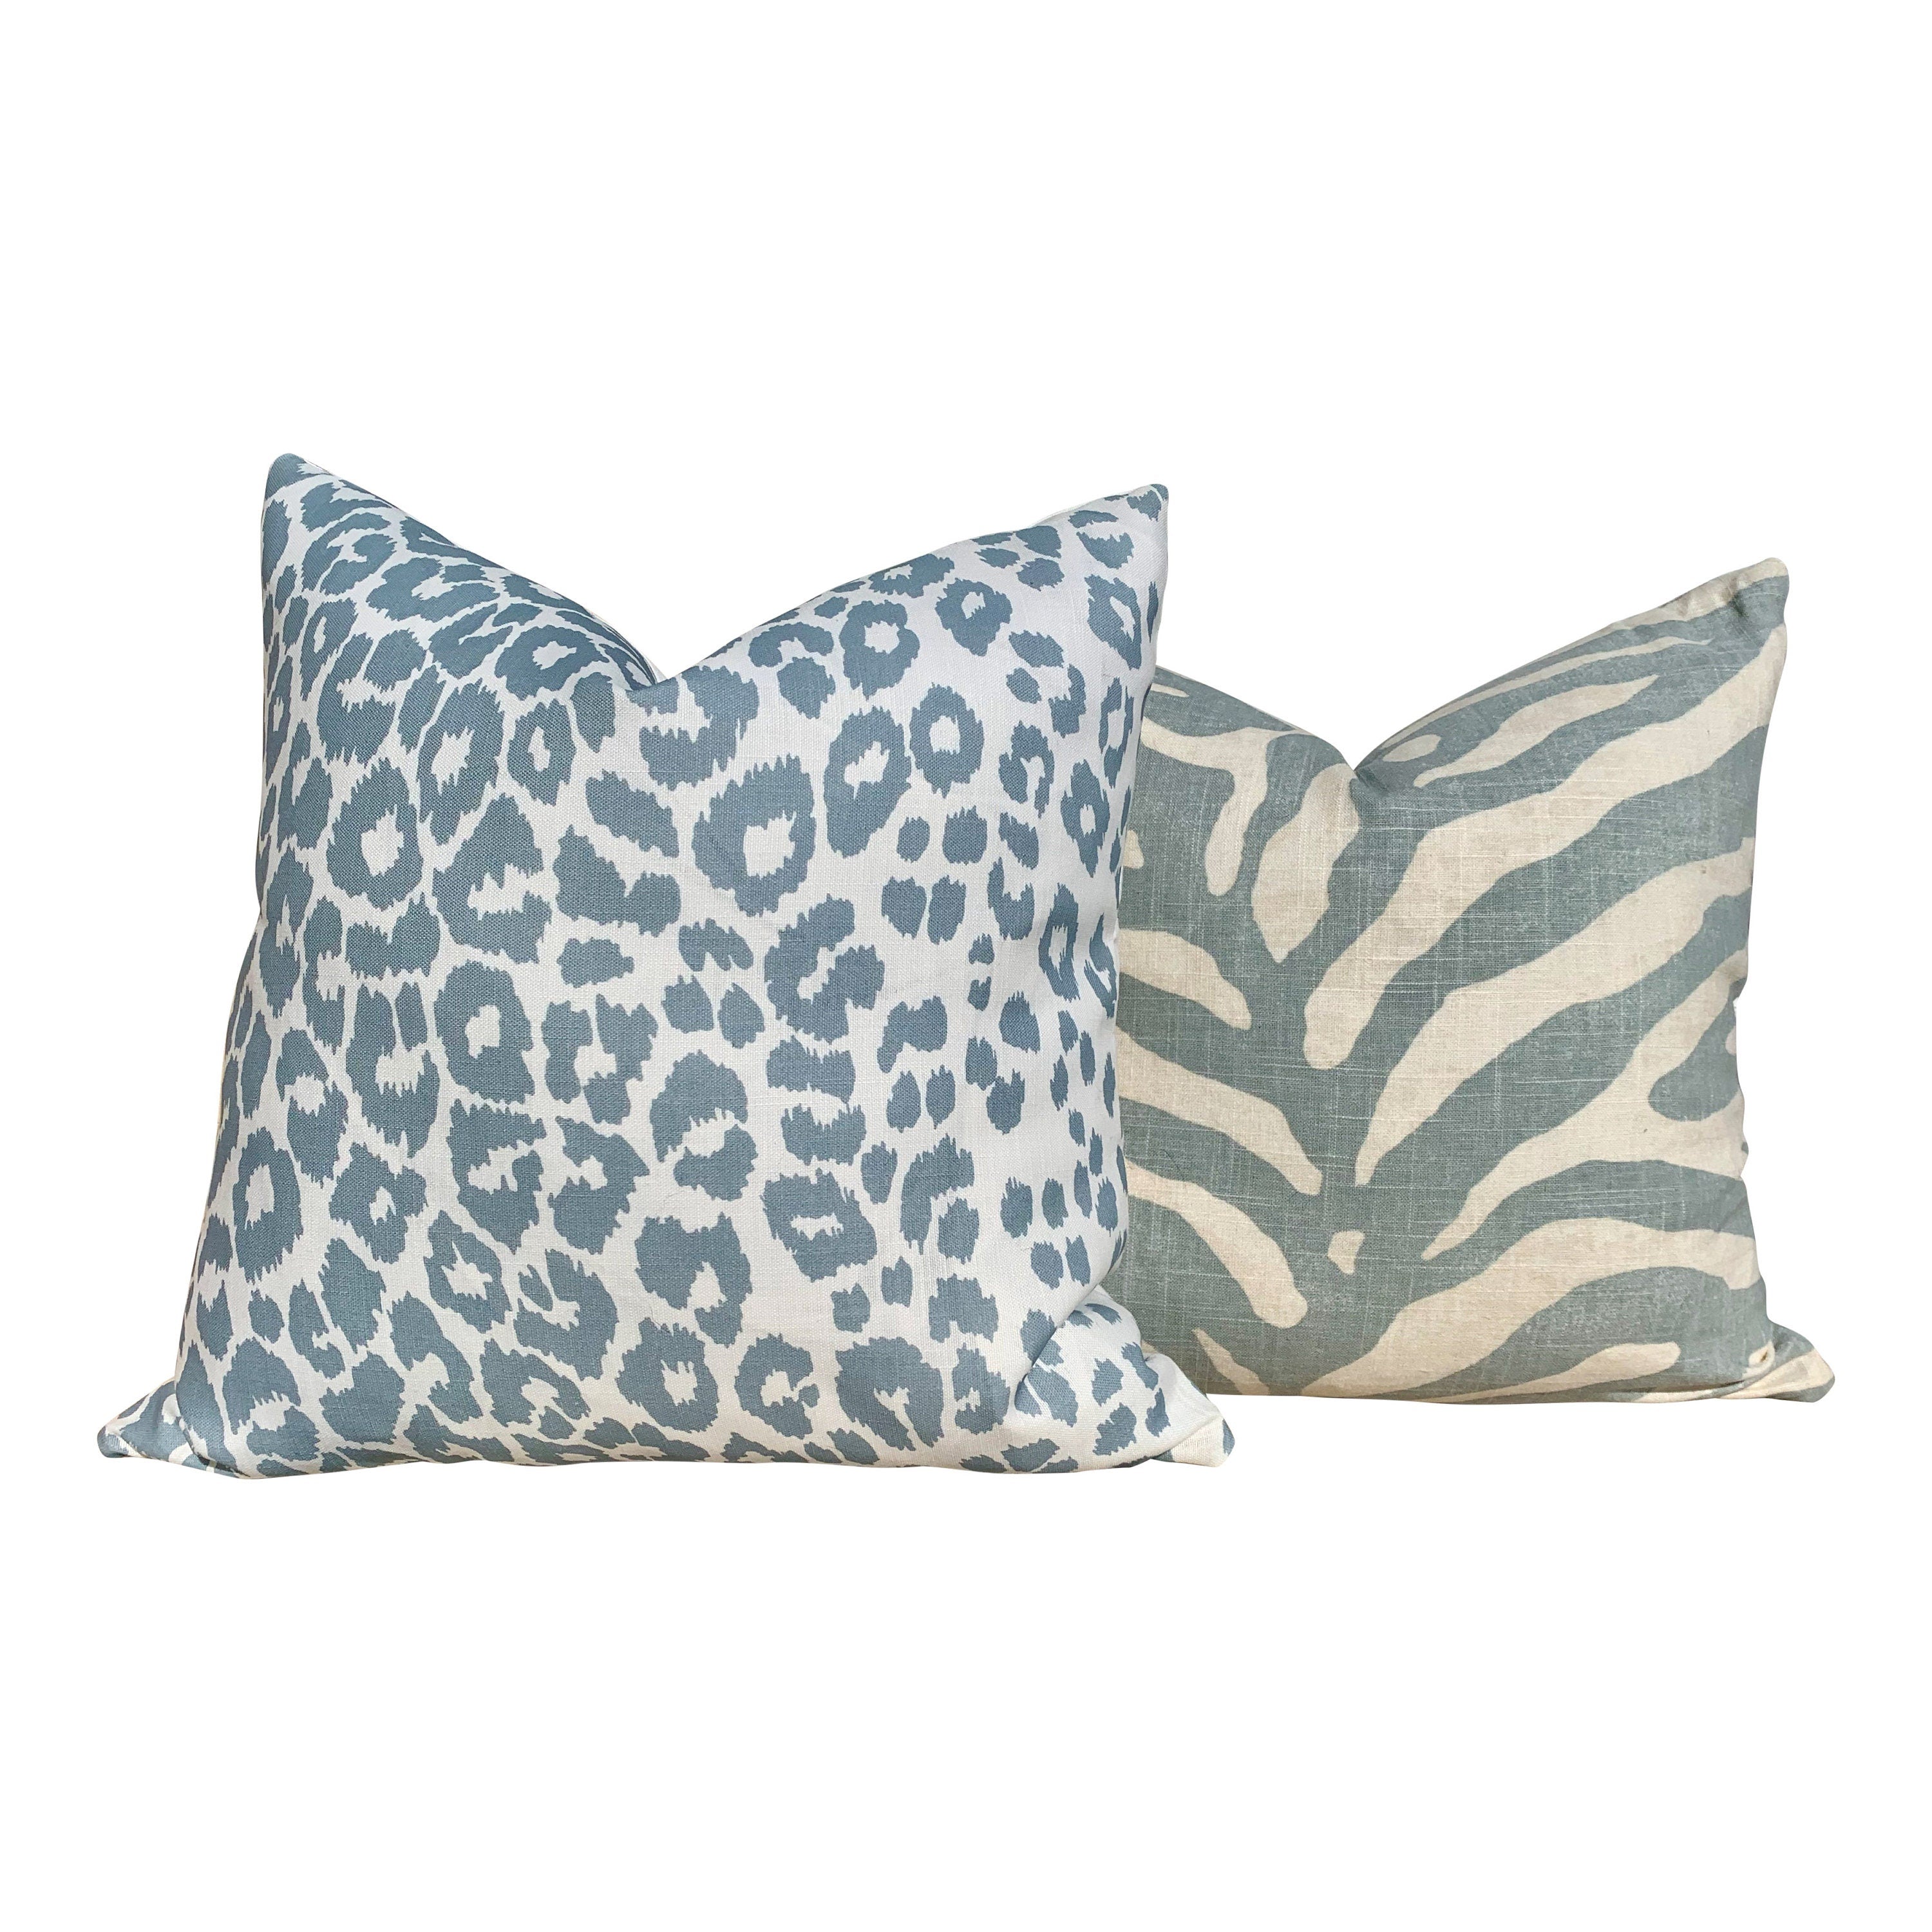 Animal Skin Pillow in Spa Blue. Zebra Lumbar Cushion Cover, Accent Pillow, Striped Lumbar pillow, Euro Sham 26x26